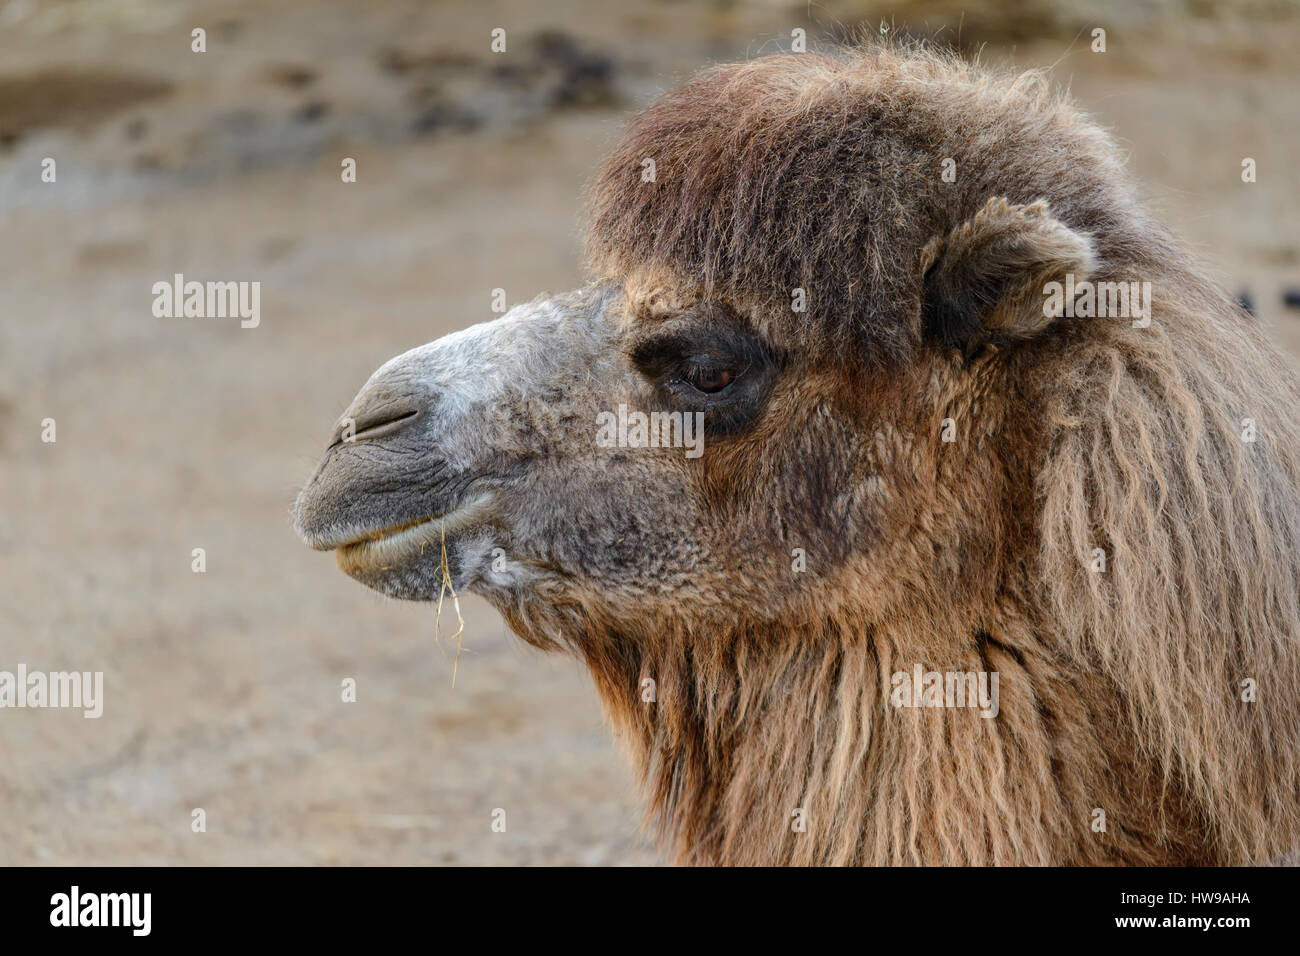 Camel, animal in the Parque de la Naturaleza de Cabarceno, Cantabria, Spain, Europe. Stock Photo